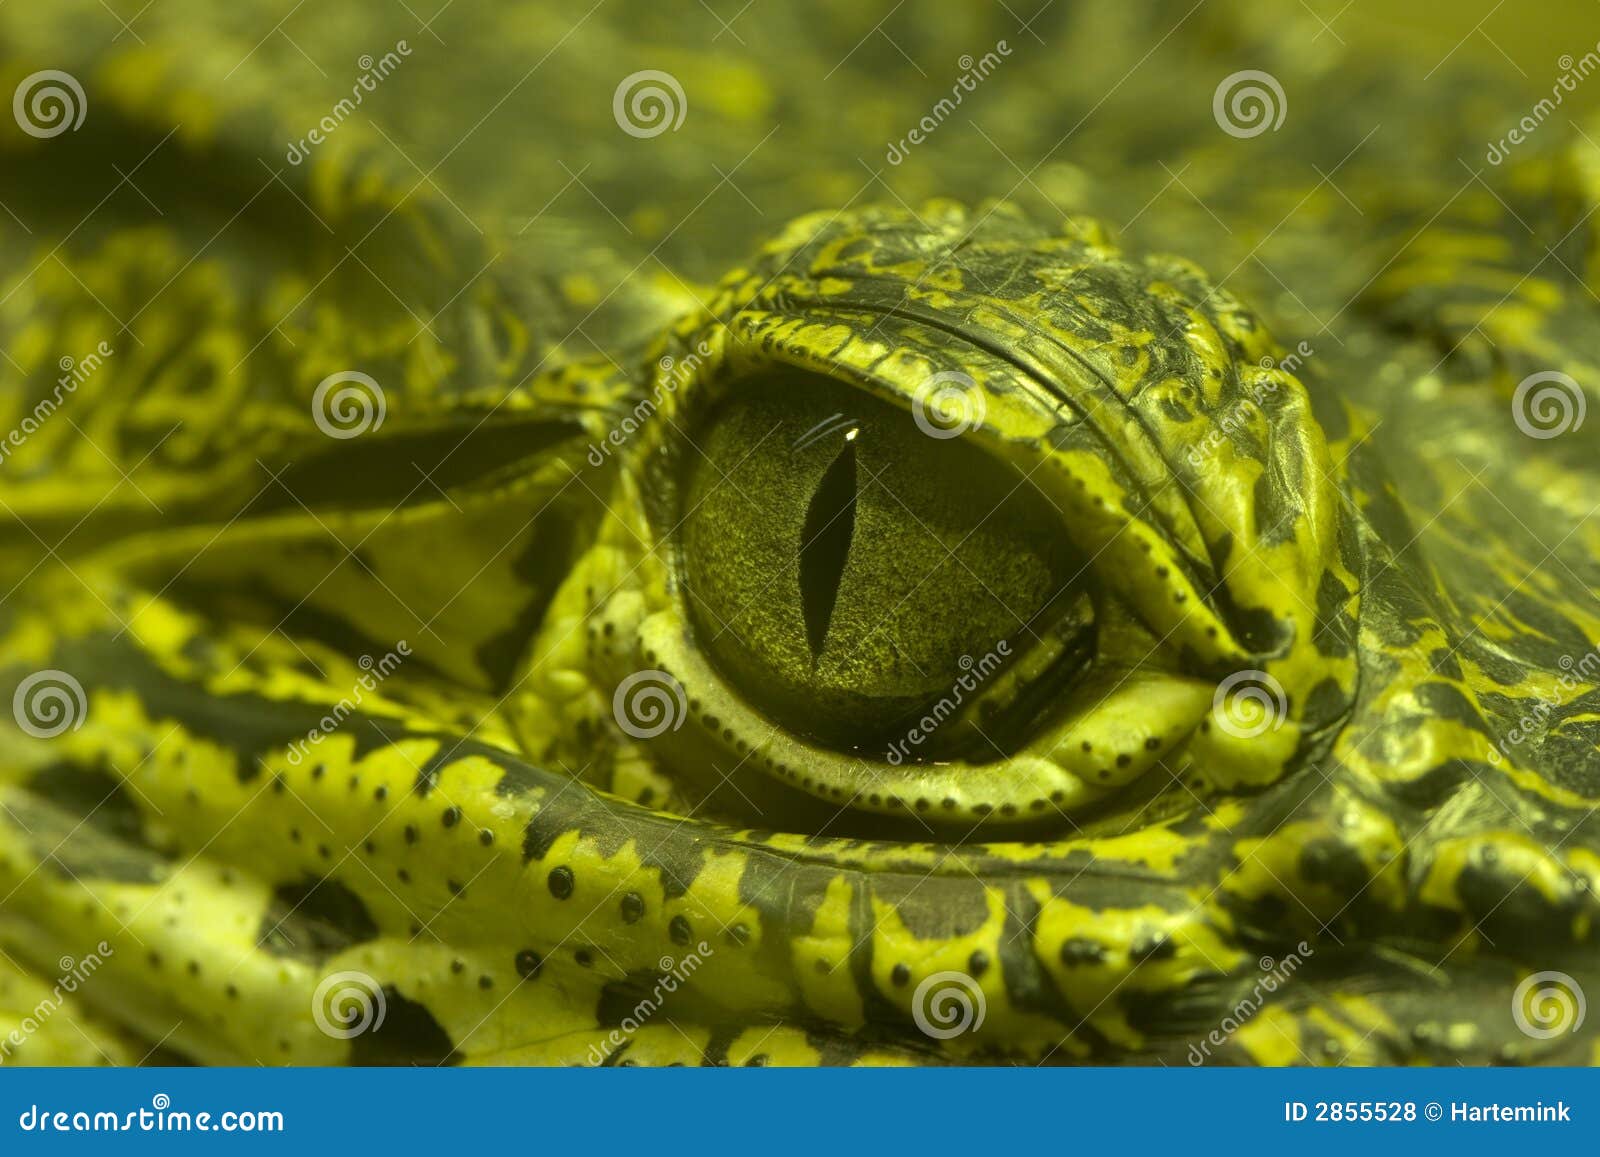 green eye of a green alligator